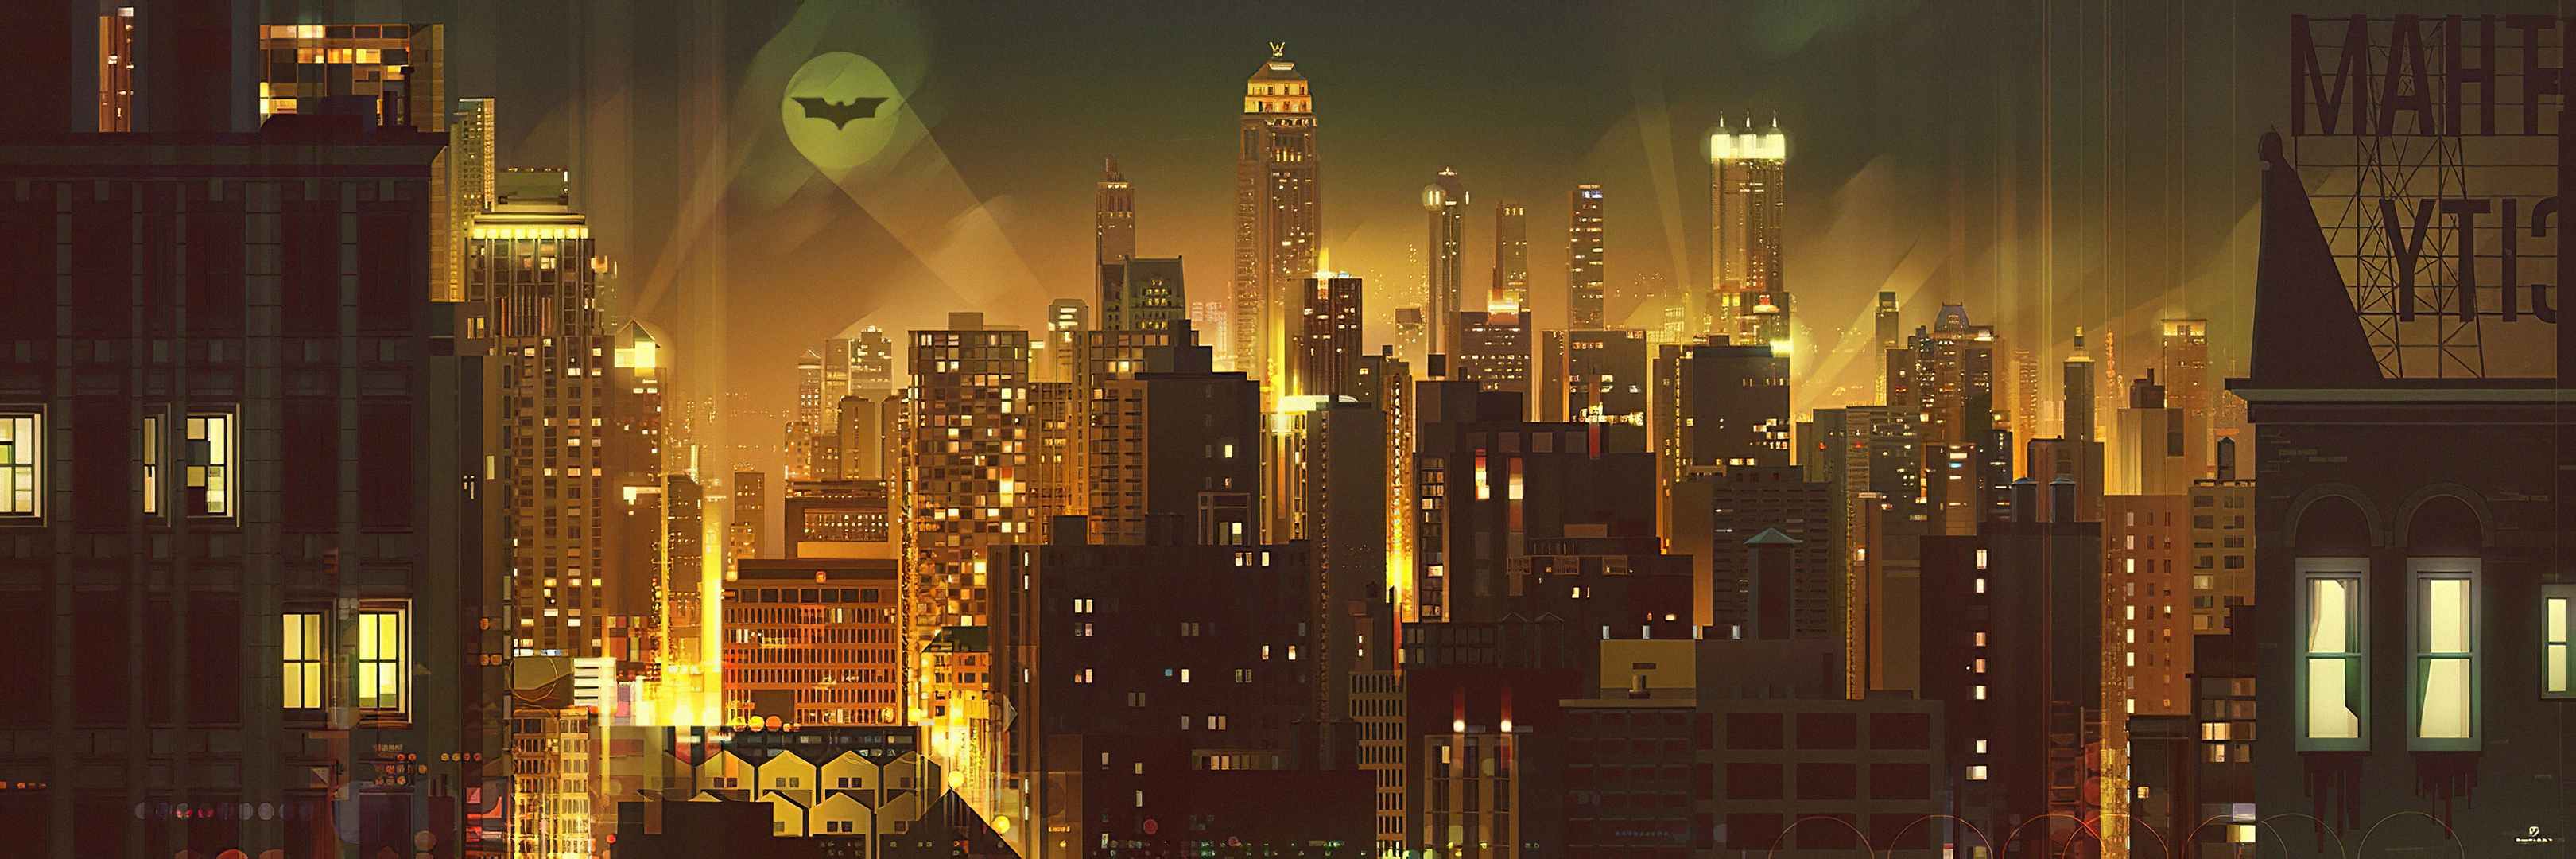 Gotham City Hd Wallpaper 2630